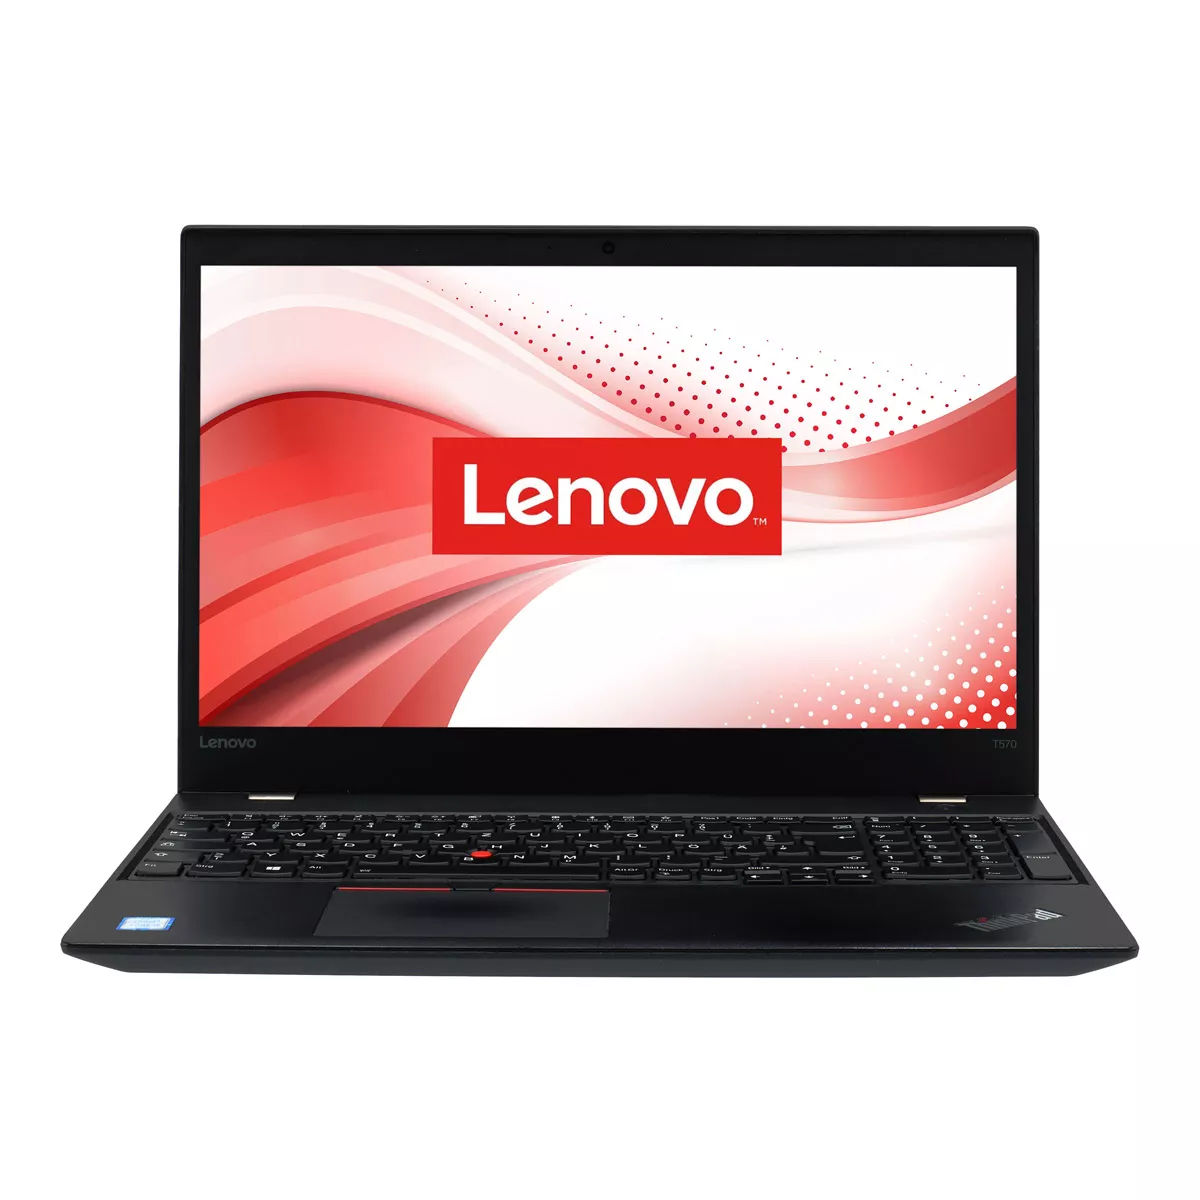 Lenovo ThinkPad T580 Core i5 8250U Full-HD 240 GB M.2 nVME SSD Webcam A+